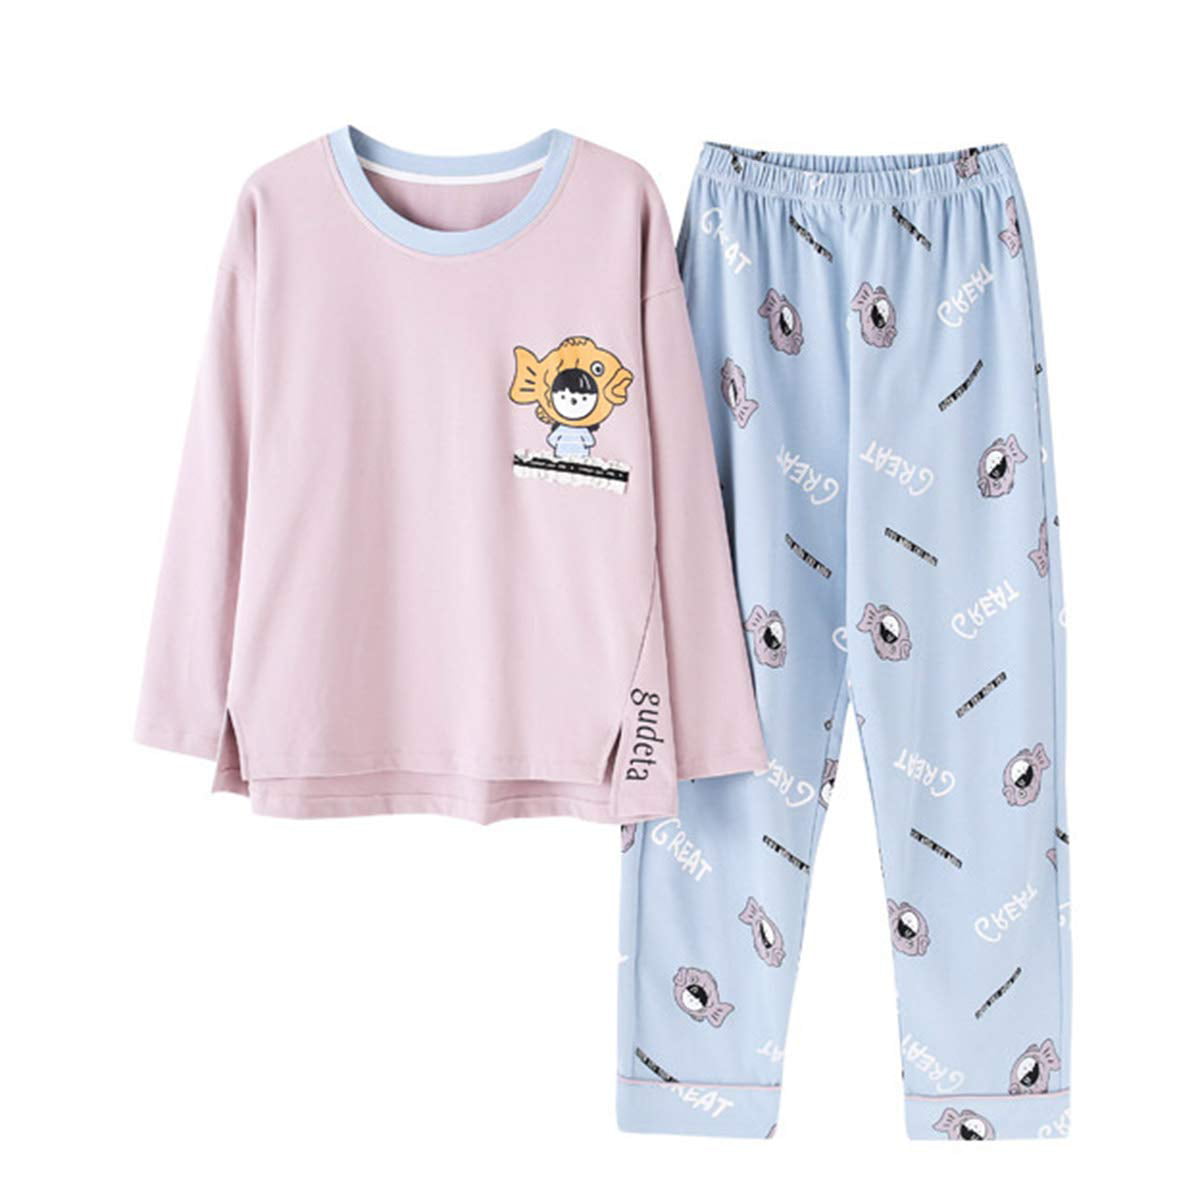 Womens' Pajamas Set Pyjamas,Long Sleeve Tops & Pants Sleepwear Set ...